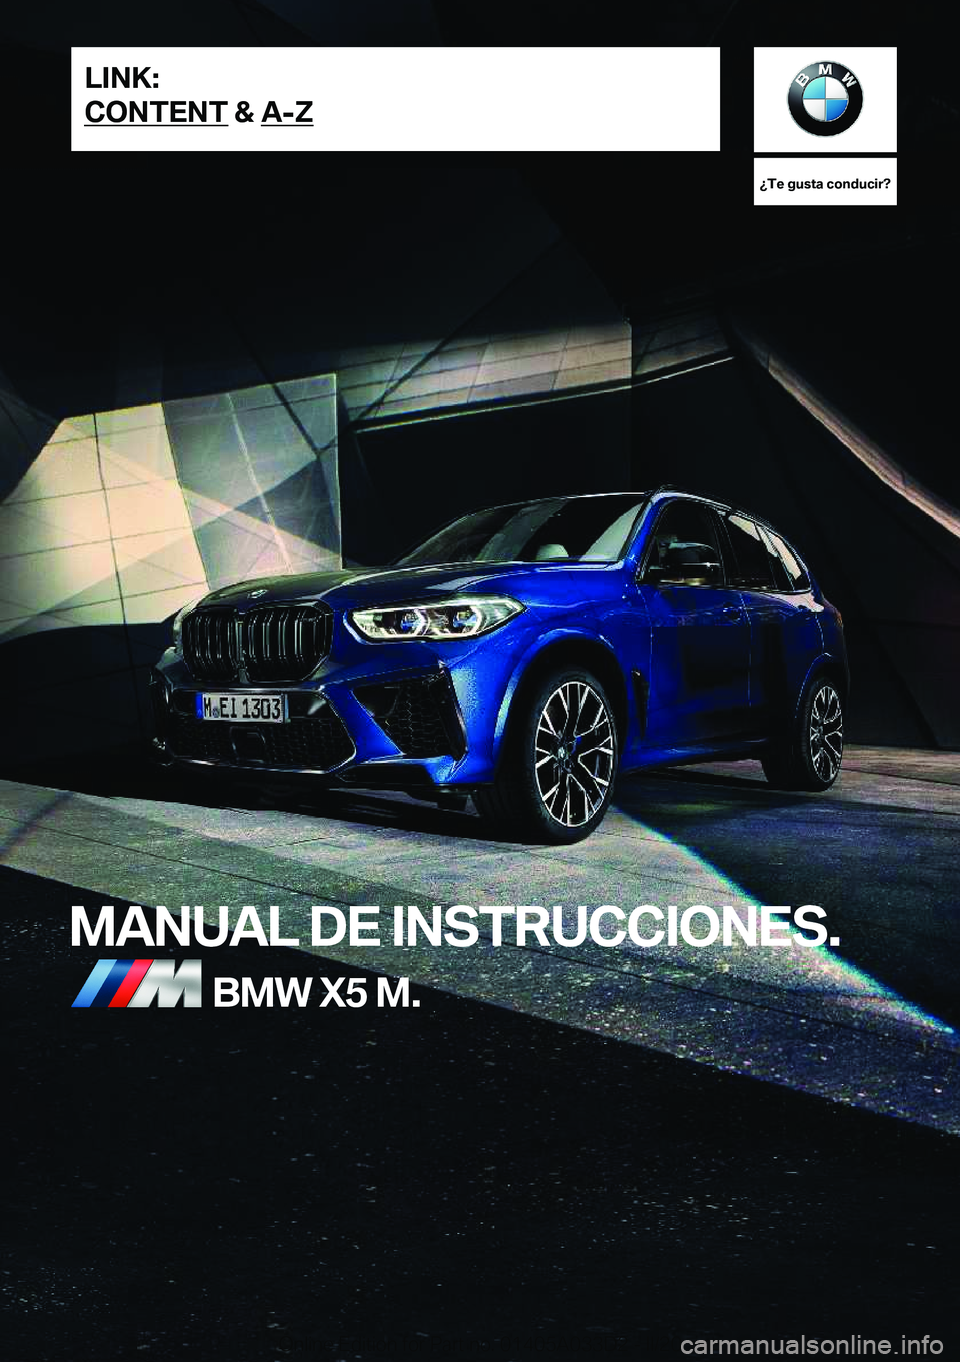 BMW X5 M 2020  Manuales de Empleo (in Spanish) ��T�e��g�u�s�t�a��c�o�n�d�u�c�i�r� 
�M�A�N�U�A�L��D�E��I�N�S�T�R�U�C�C�I�O�N�E�S�.�B�M�W��X�5��M�.�L�I�N�K�:
�C�O�N�T�E�N�T��&��A�-�Z�O�n�l�i�n�e��E�d�i�t�i�o�n��f�o�r��P�a�r�t��n�o�.��0